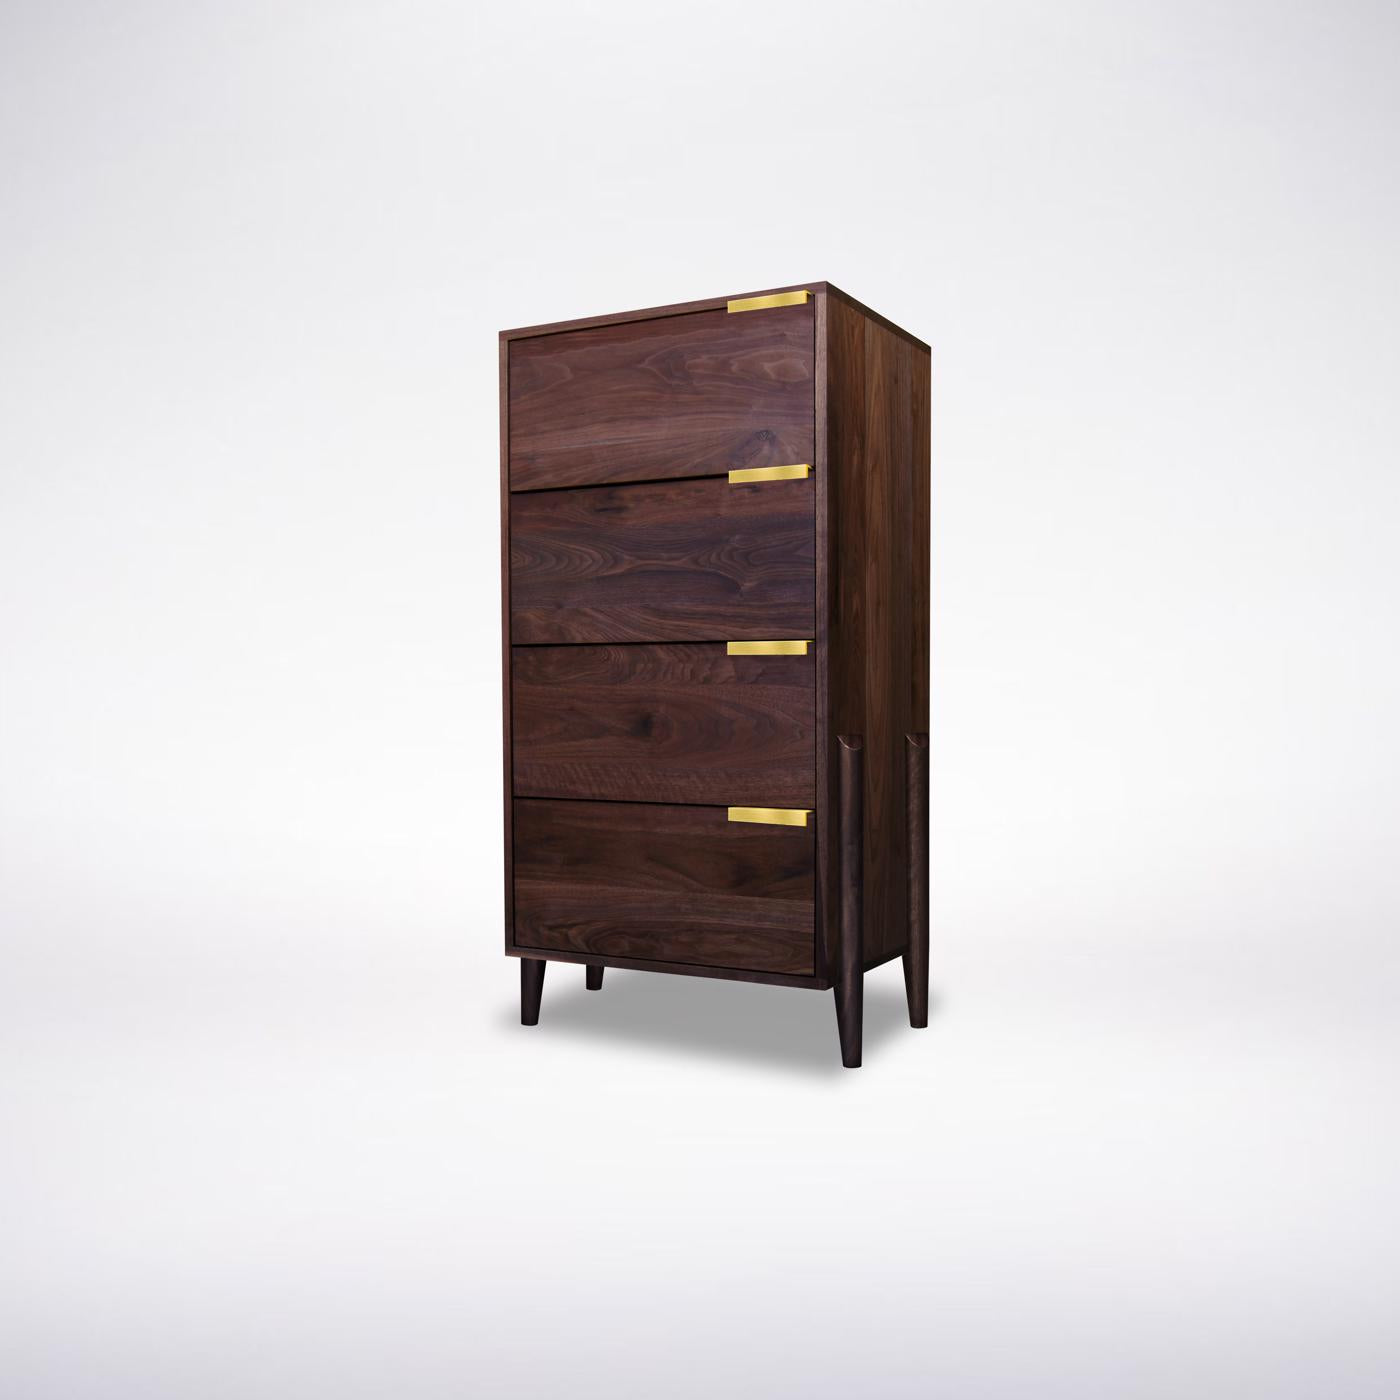 Solid wood walnut dresser with brass handles